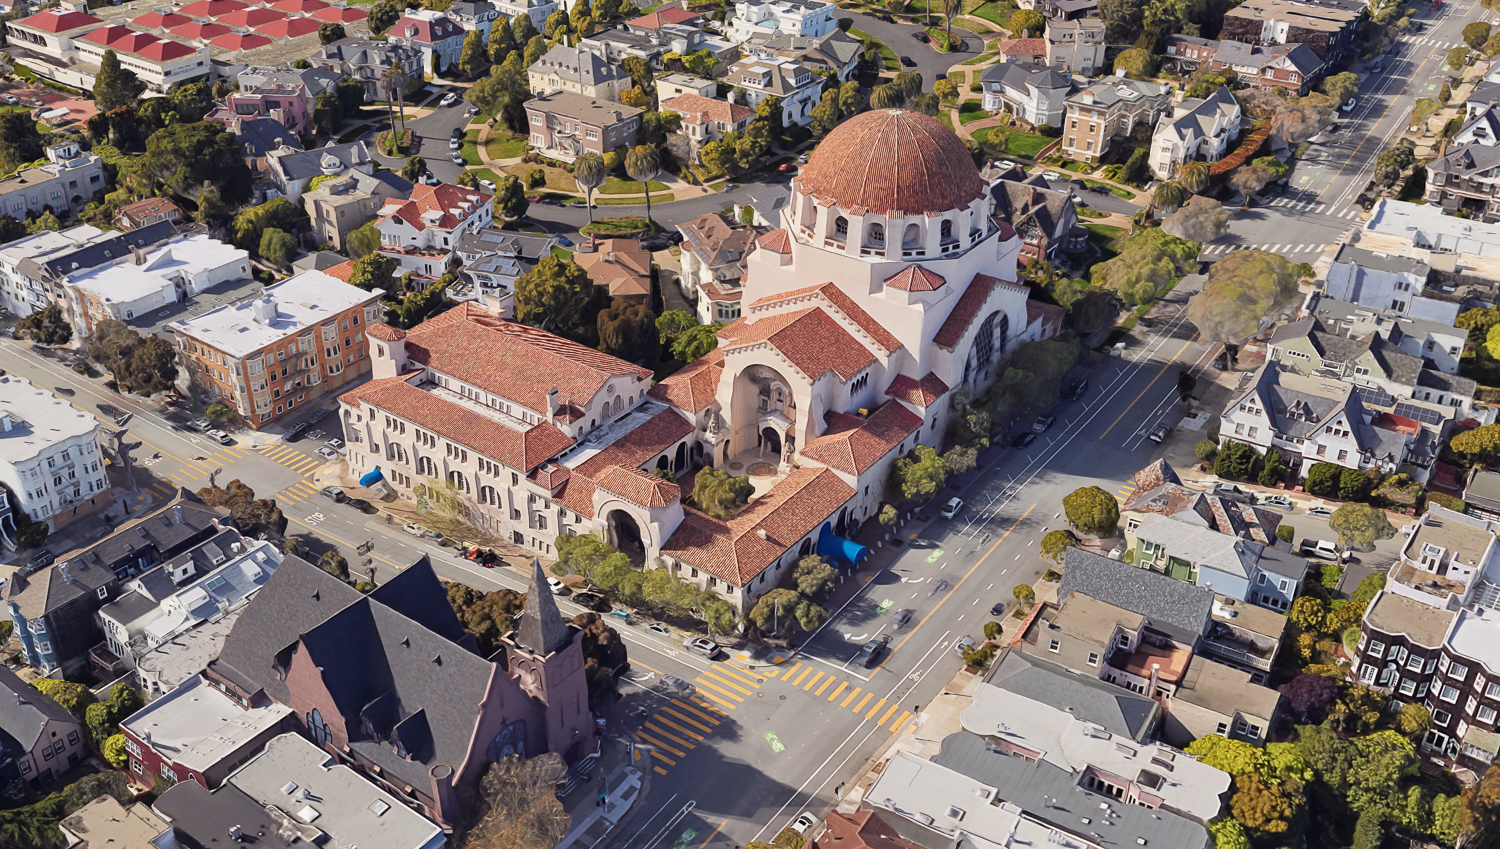 Congregation Emanu-El Synagogue existing condition, image via Google Satellite